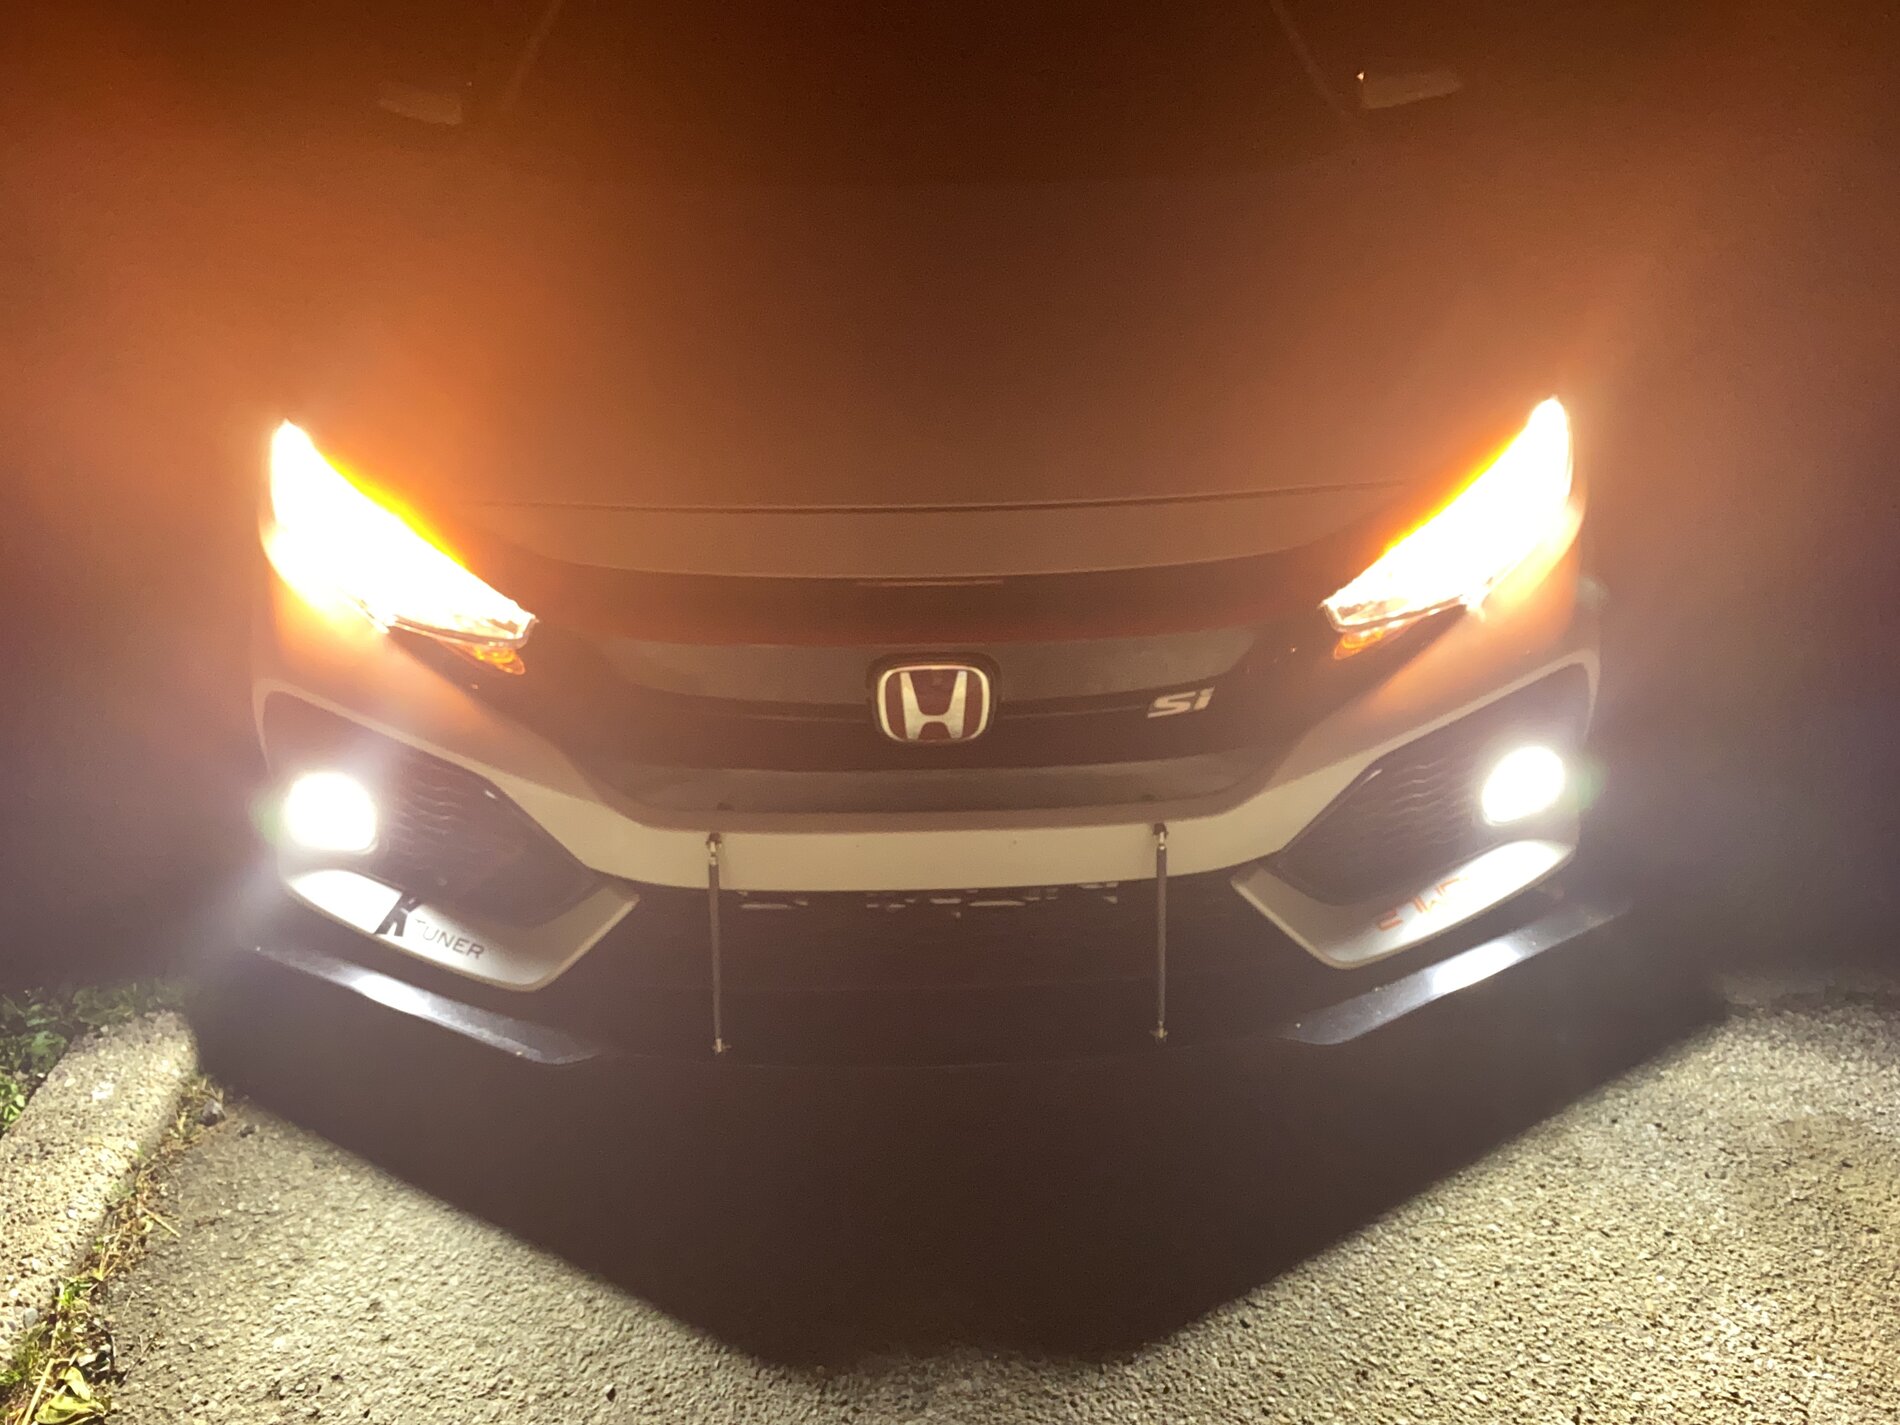 Honda Civic 10th gen 2019 Civic Si Headlight Replacement? 67C62931-4260-453E-89A7-ACA1BD4F129B